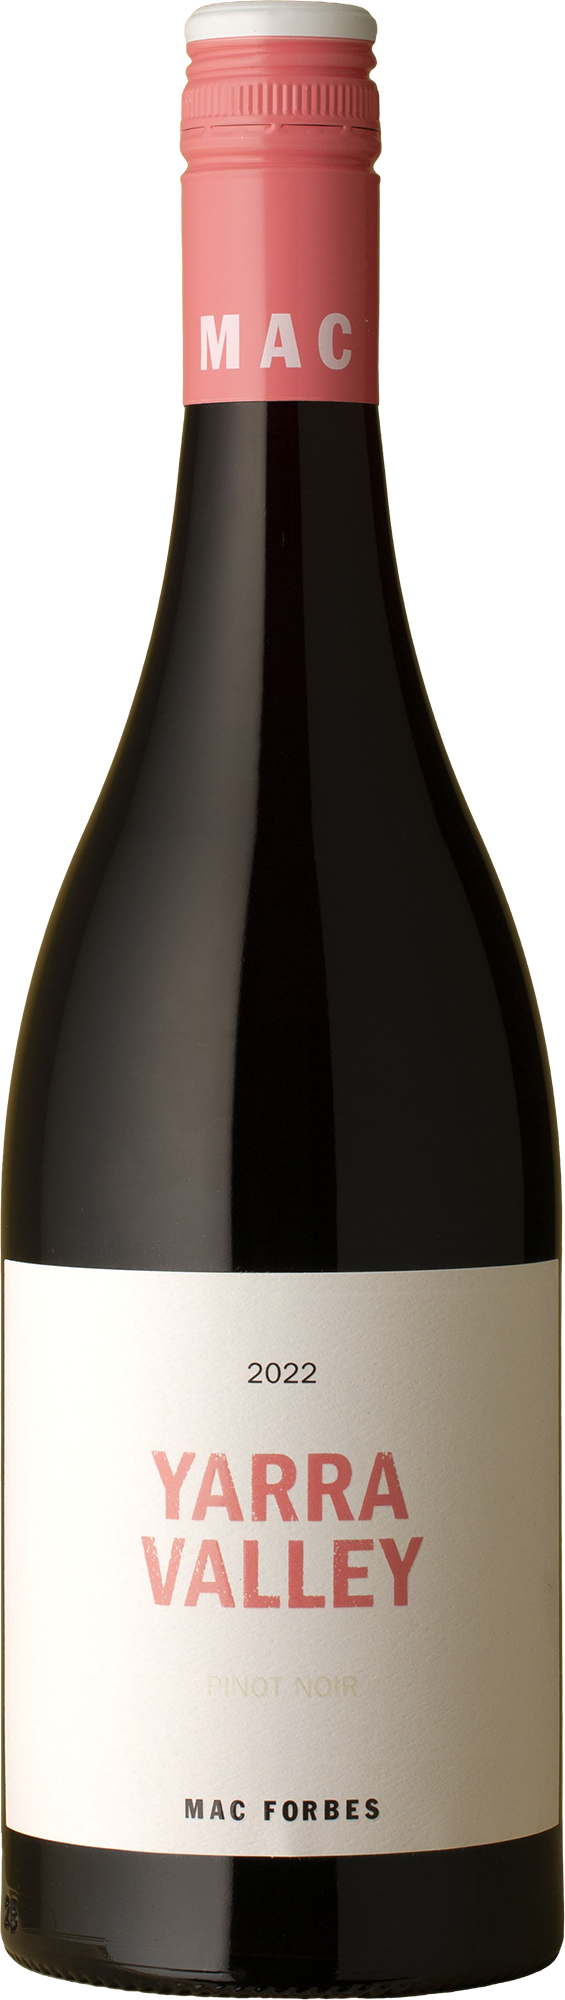 Mac Forbes -  Yarra Valley Pinot Noir 2022